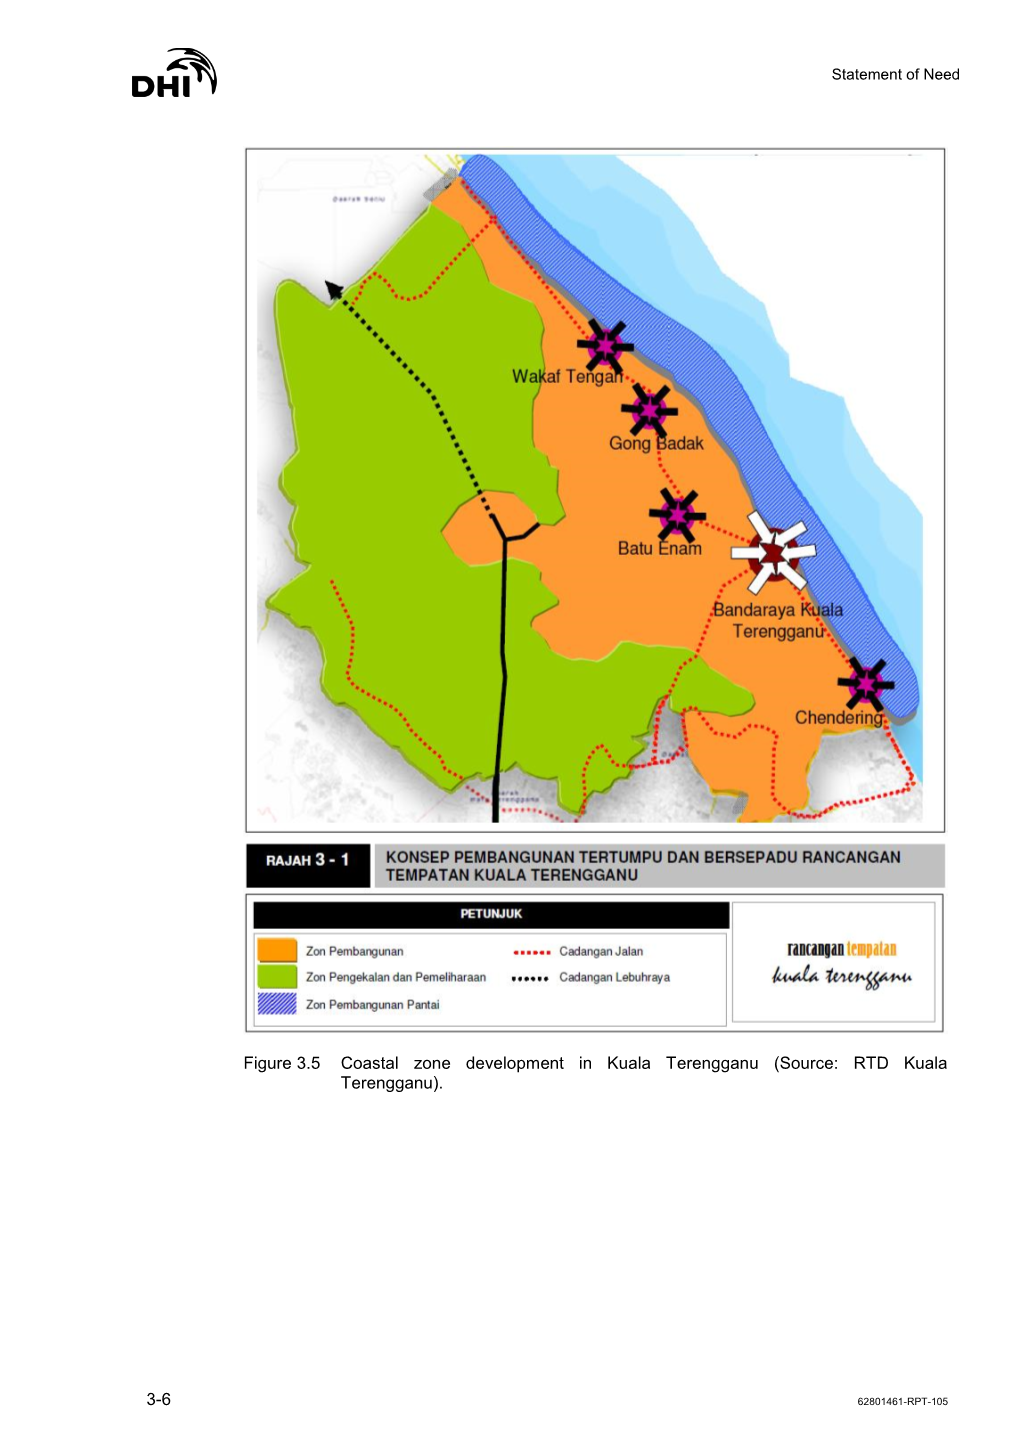 3-6 Figure 3.5 Coastal Zone Development in Kuala Terengganu